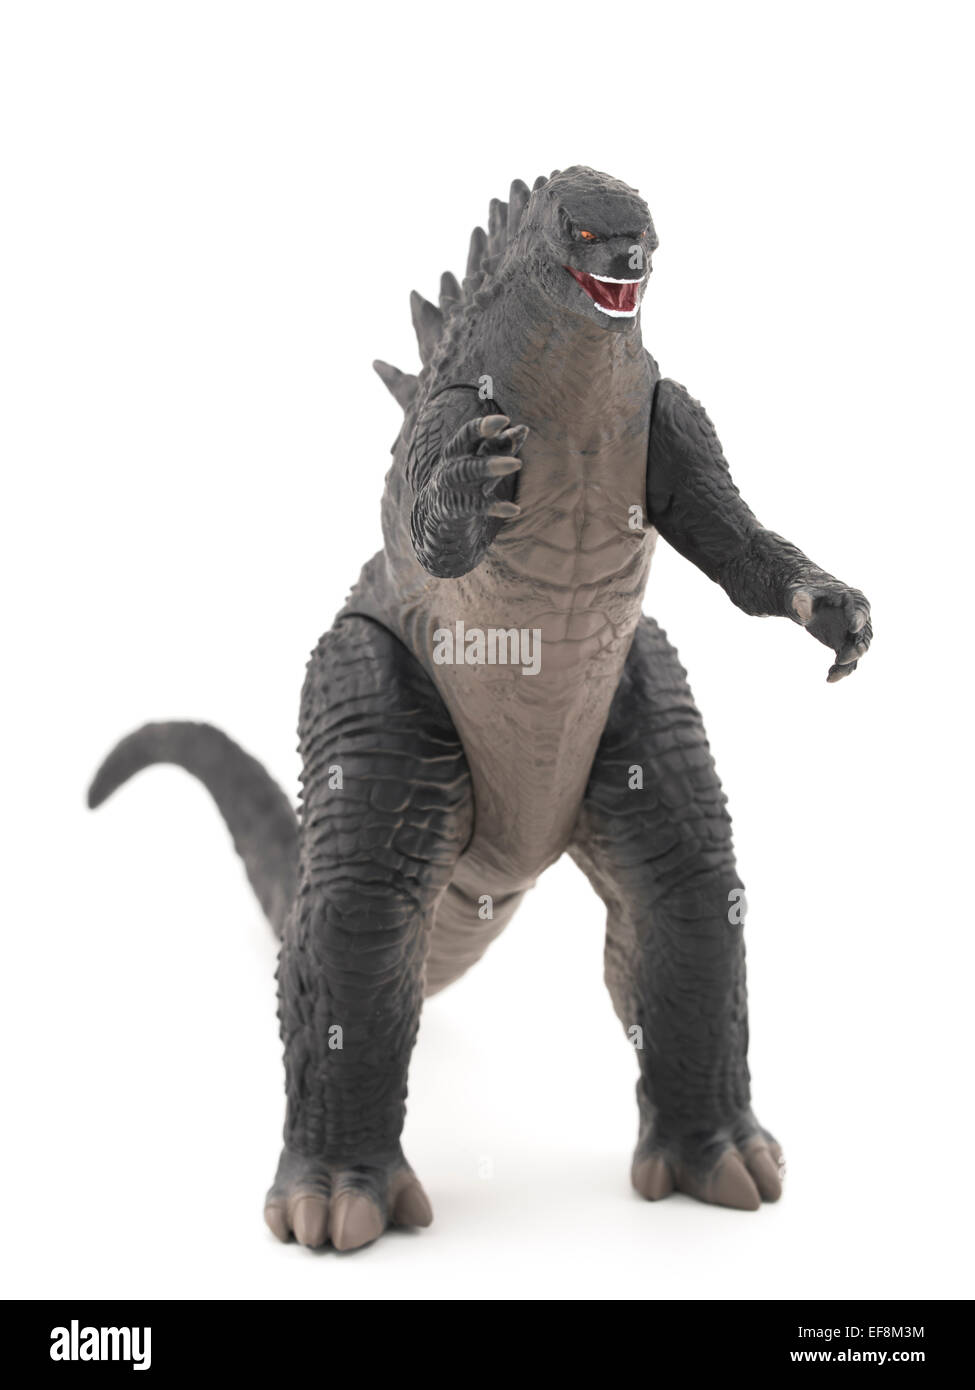 Godzilla Toy Immagini e Fotos Stock - Alamy